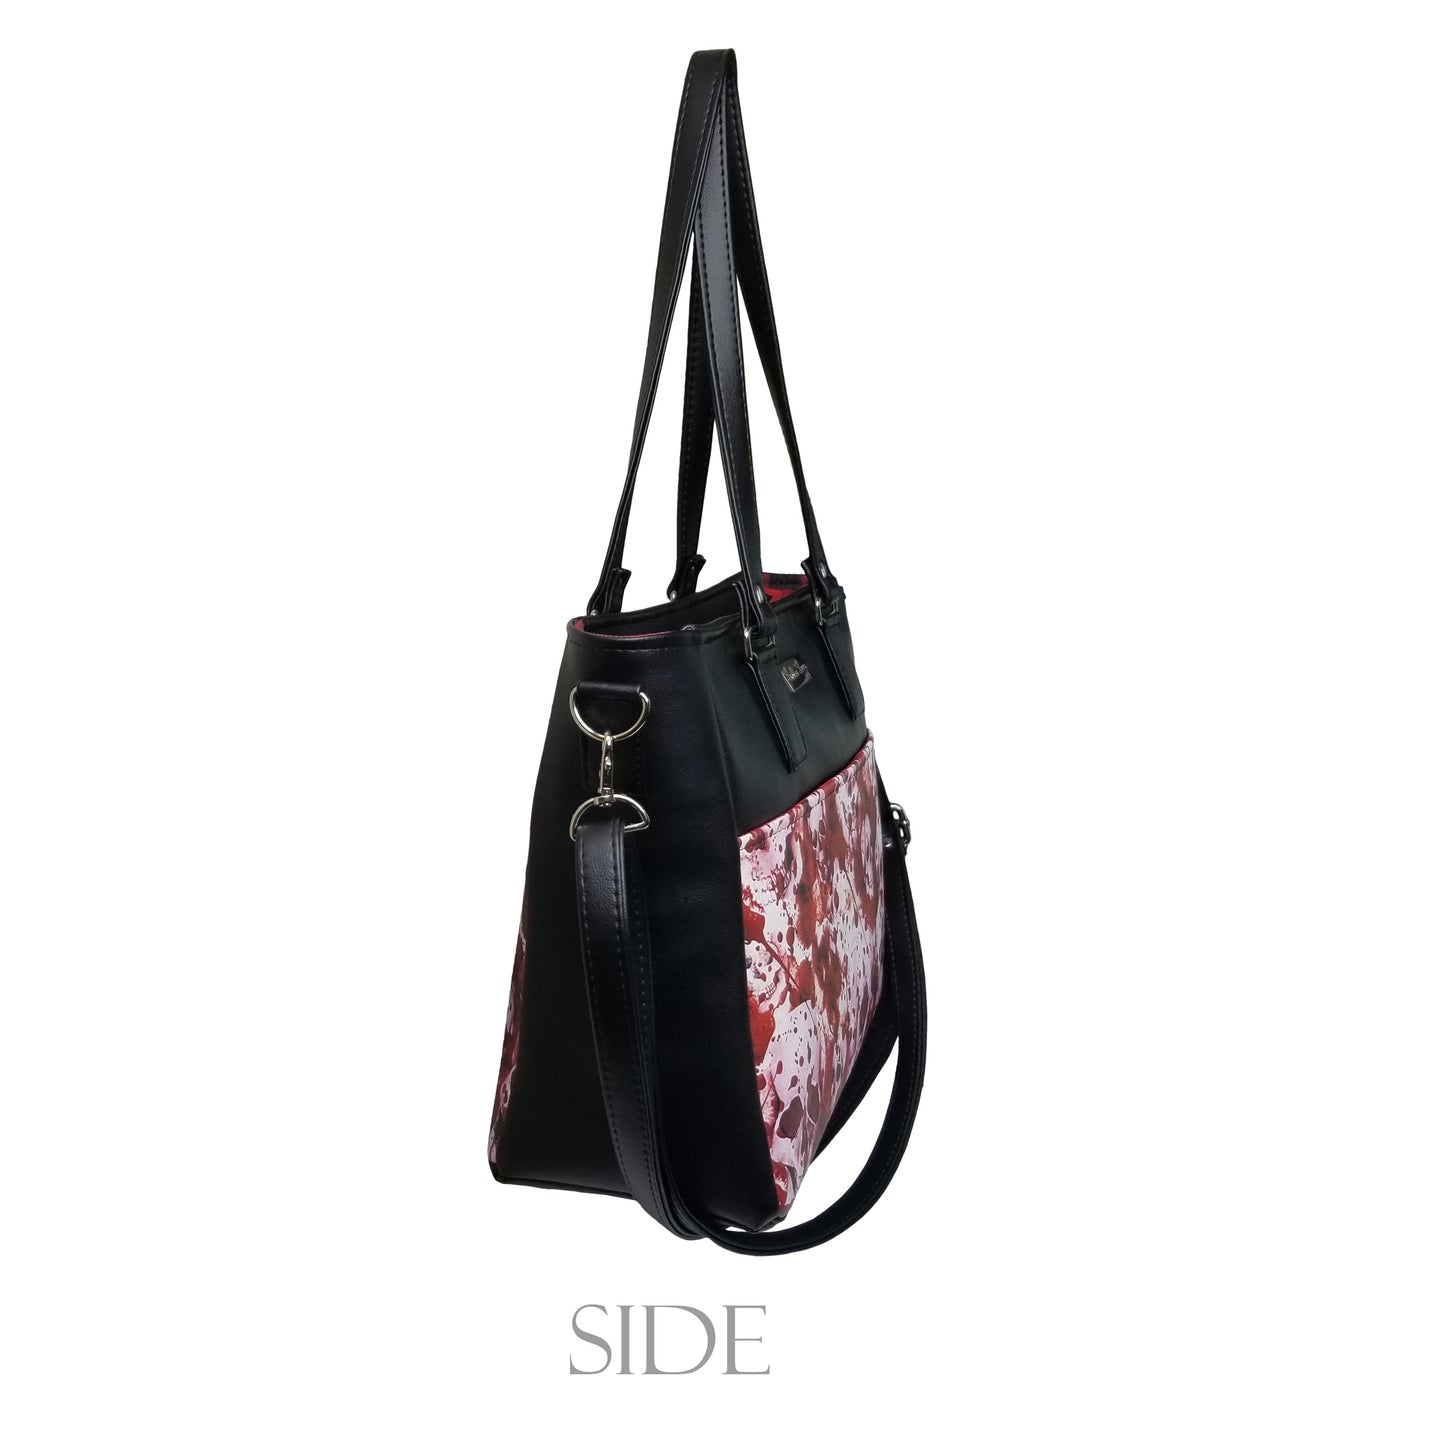 Bloody Gorgeous- Becca Handbag